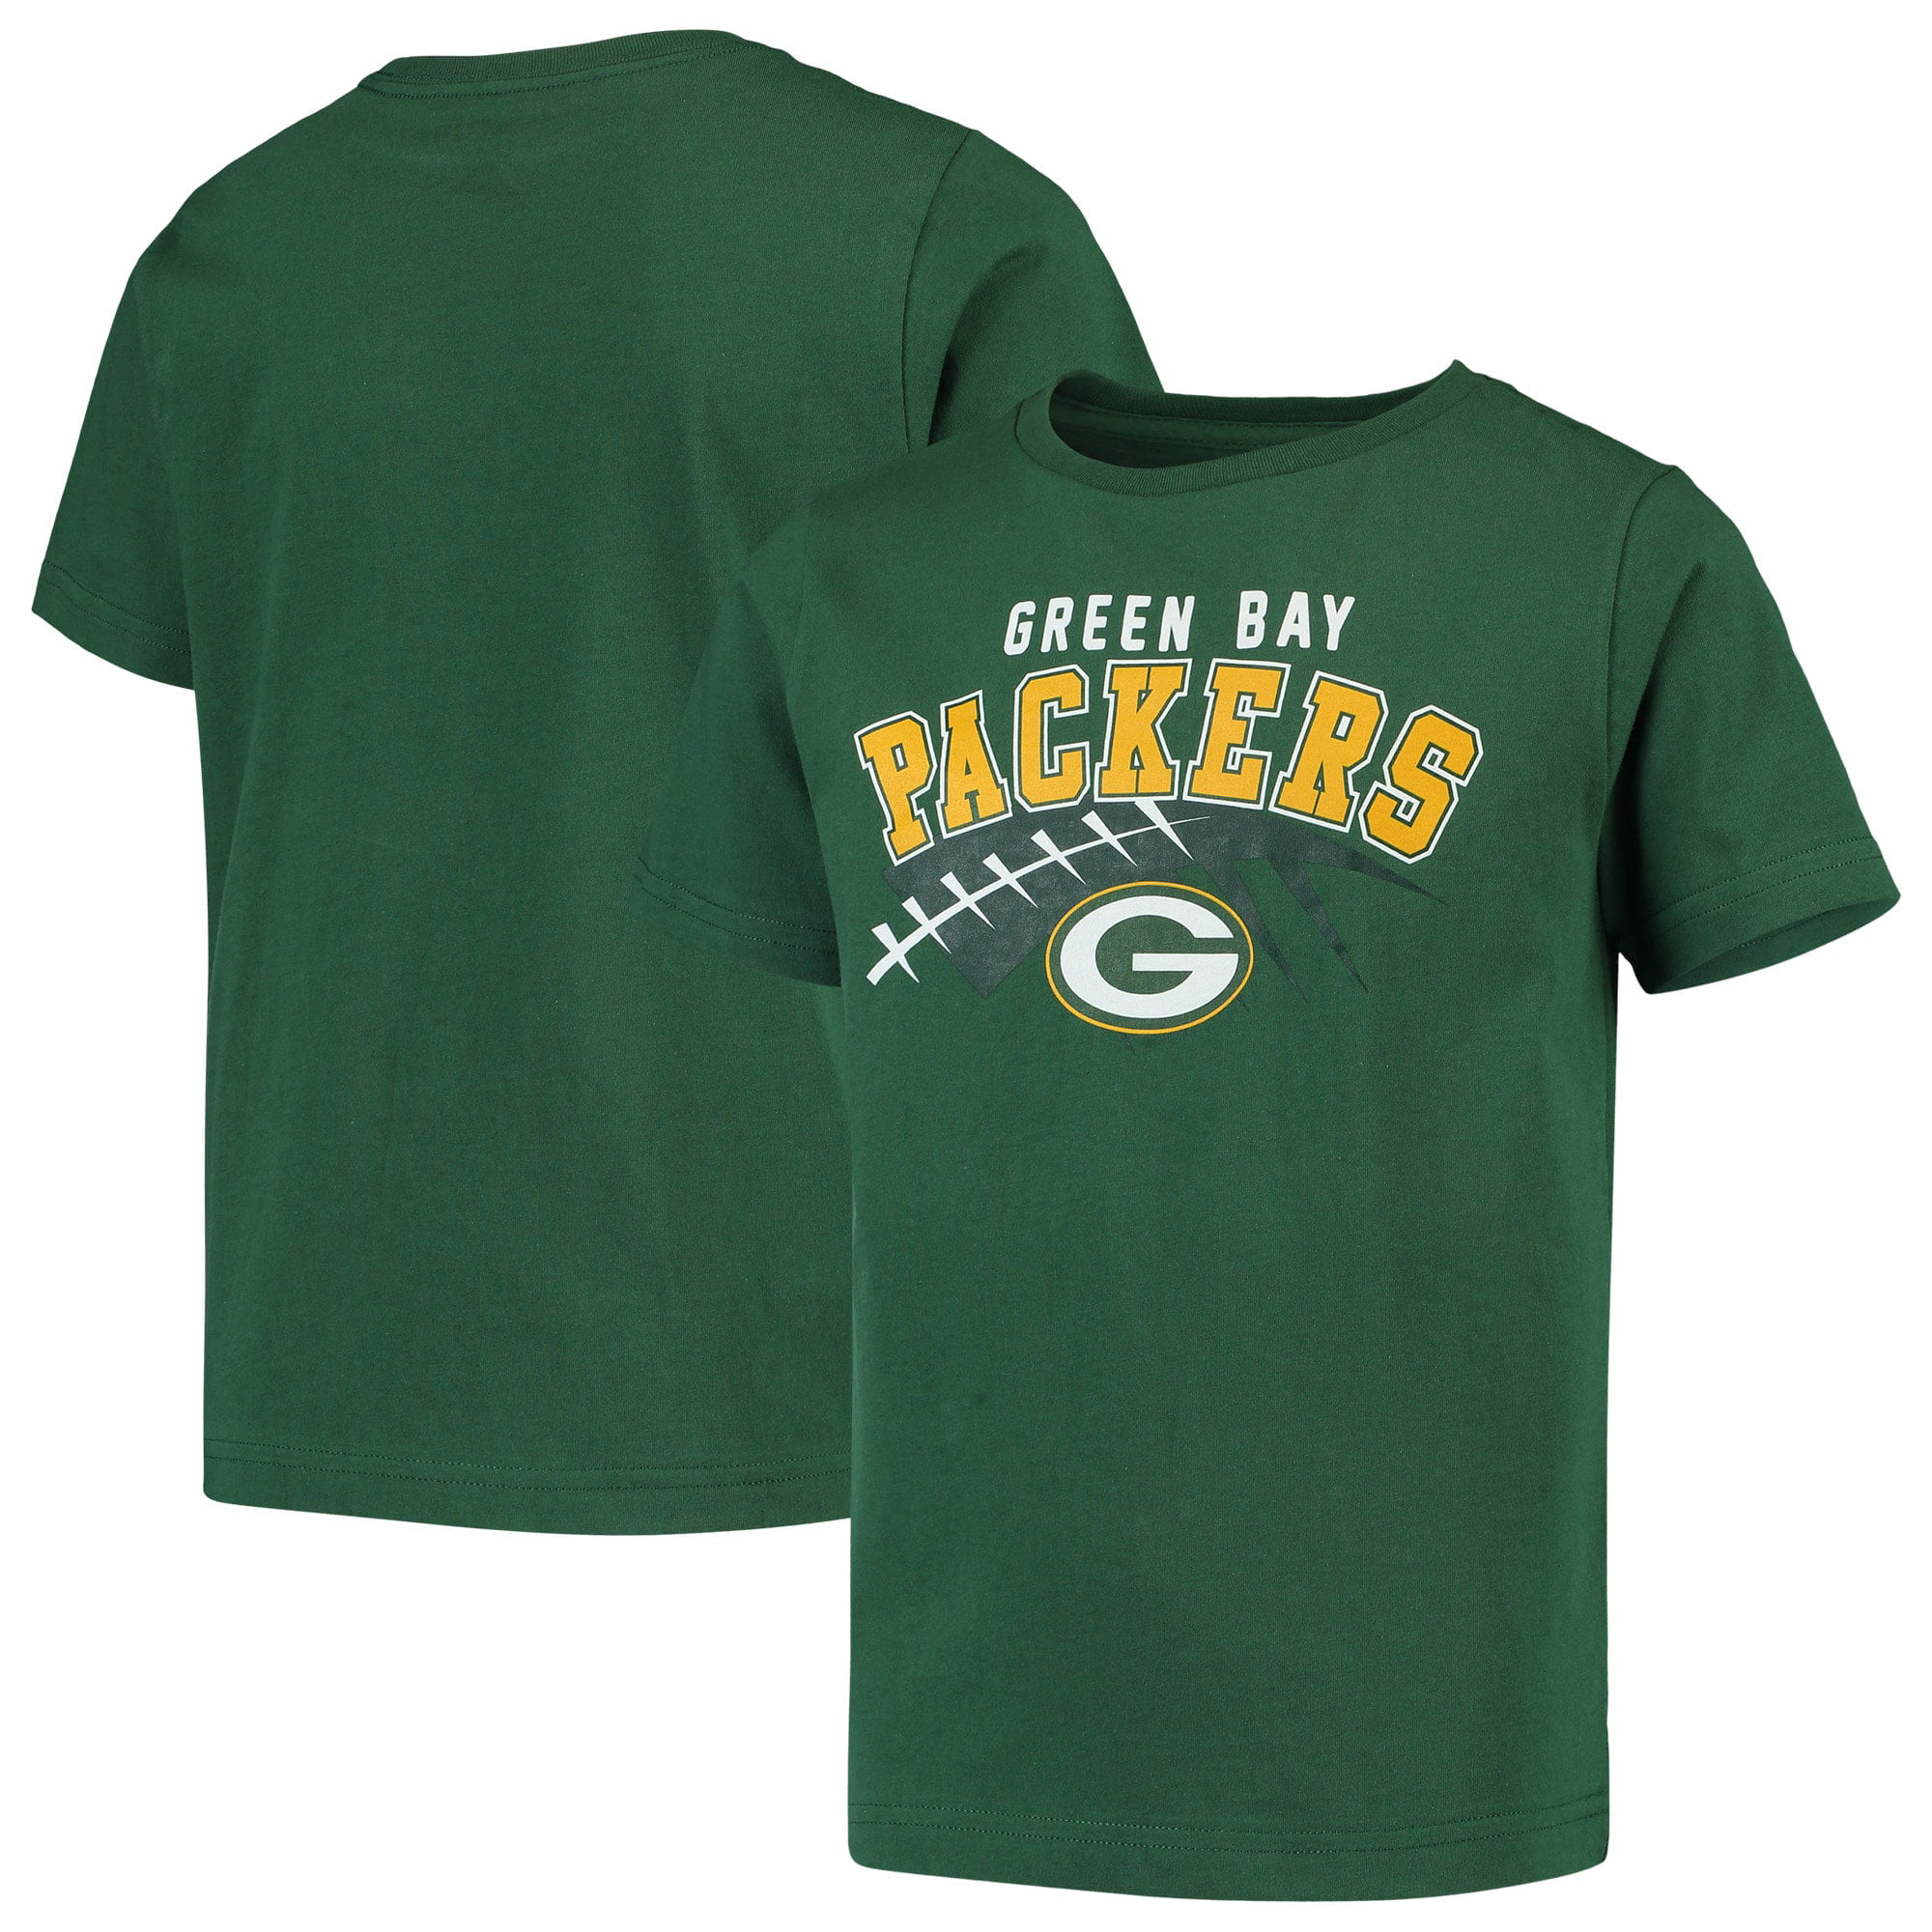 Green Bay Packers Youth Pigskin T-Shirt - Green - Walmart.com - Walmart.com